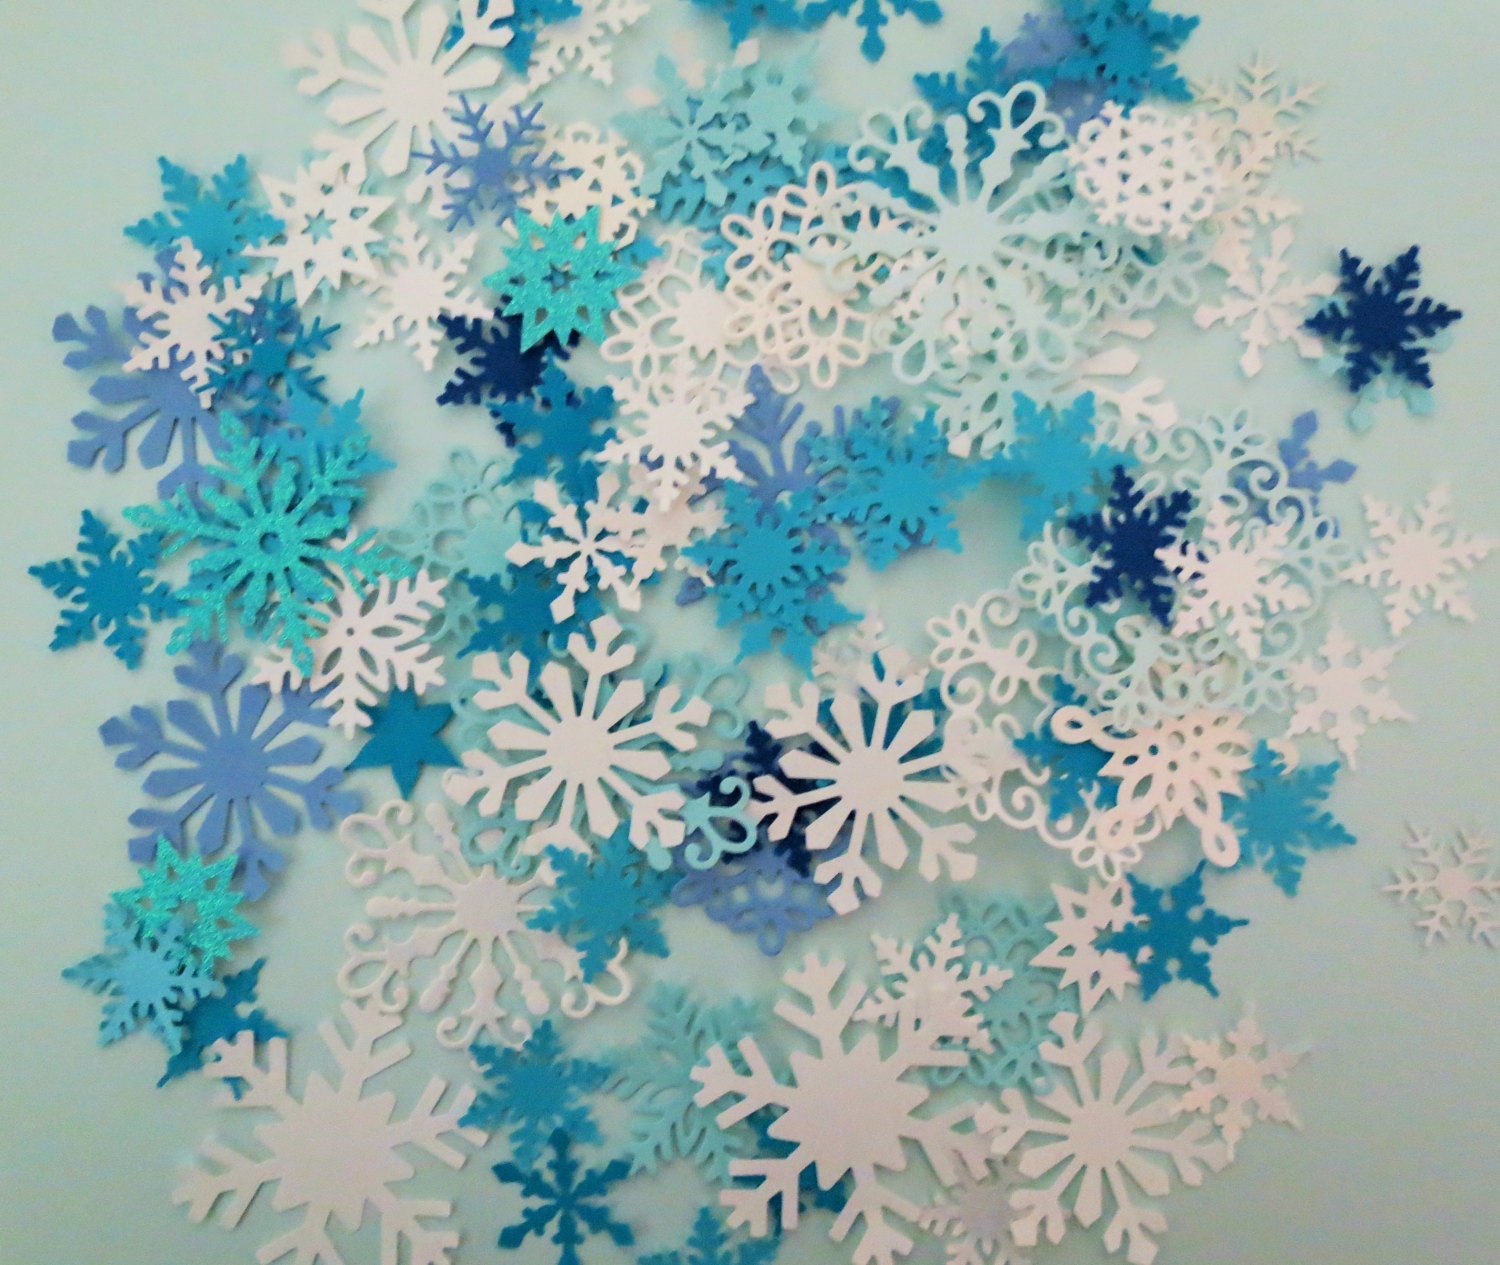 Grey and White Felt Snowflakes Mix, 30 Die Cut Felt Snowflakes